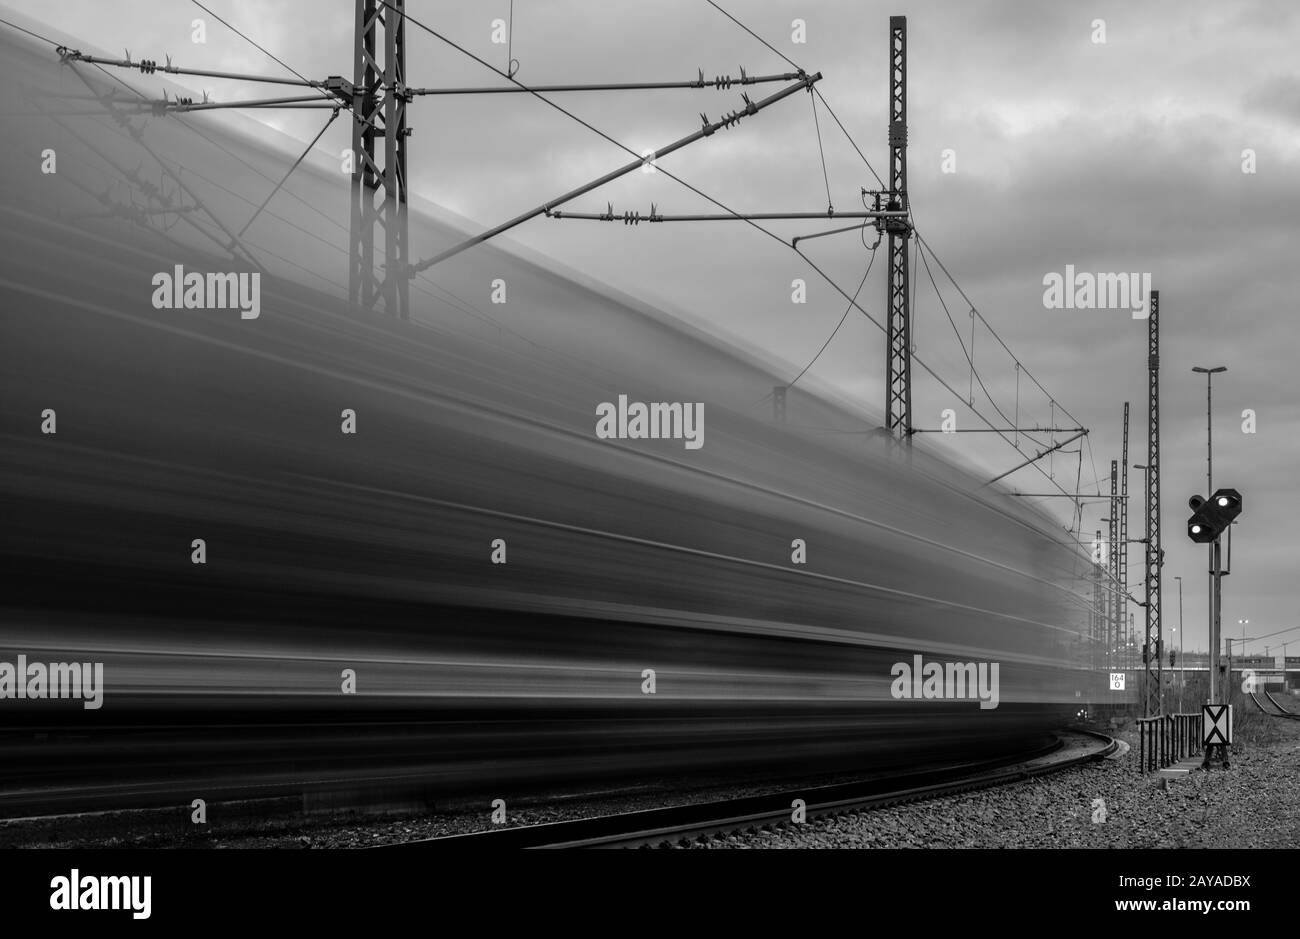 Speed of a railway train Stock Photo